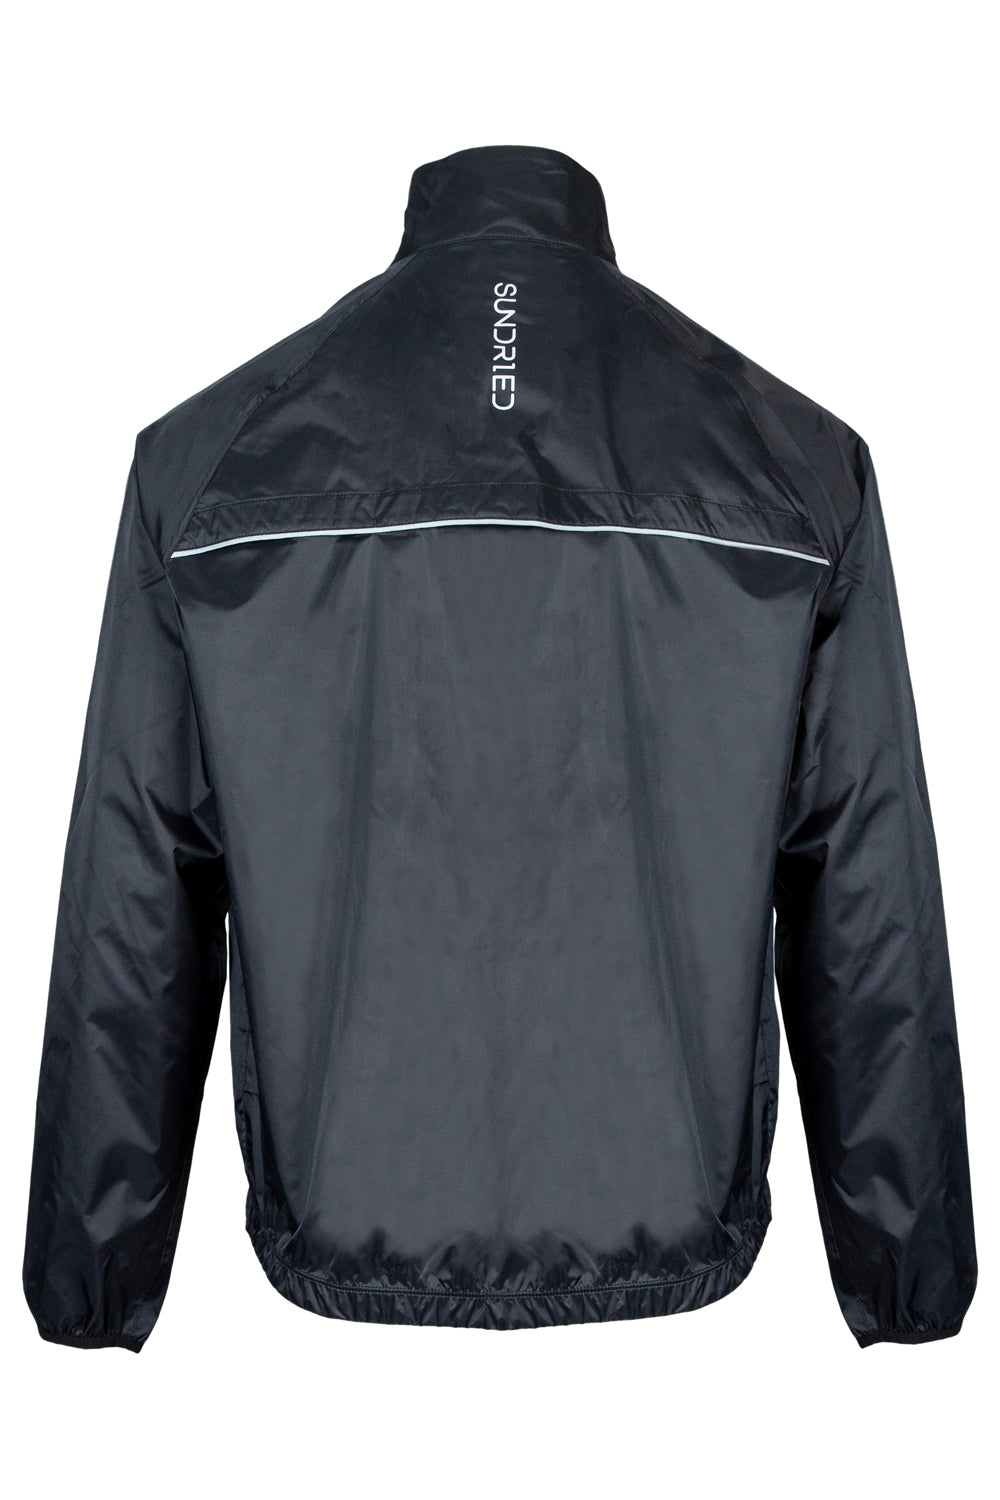 Sundried Grande Casse V3 Men's Waterproof Jacket Jackets Activewear